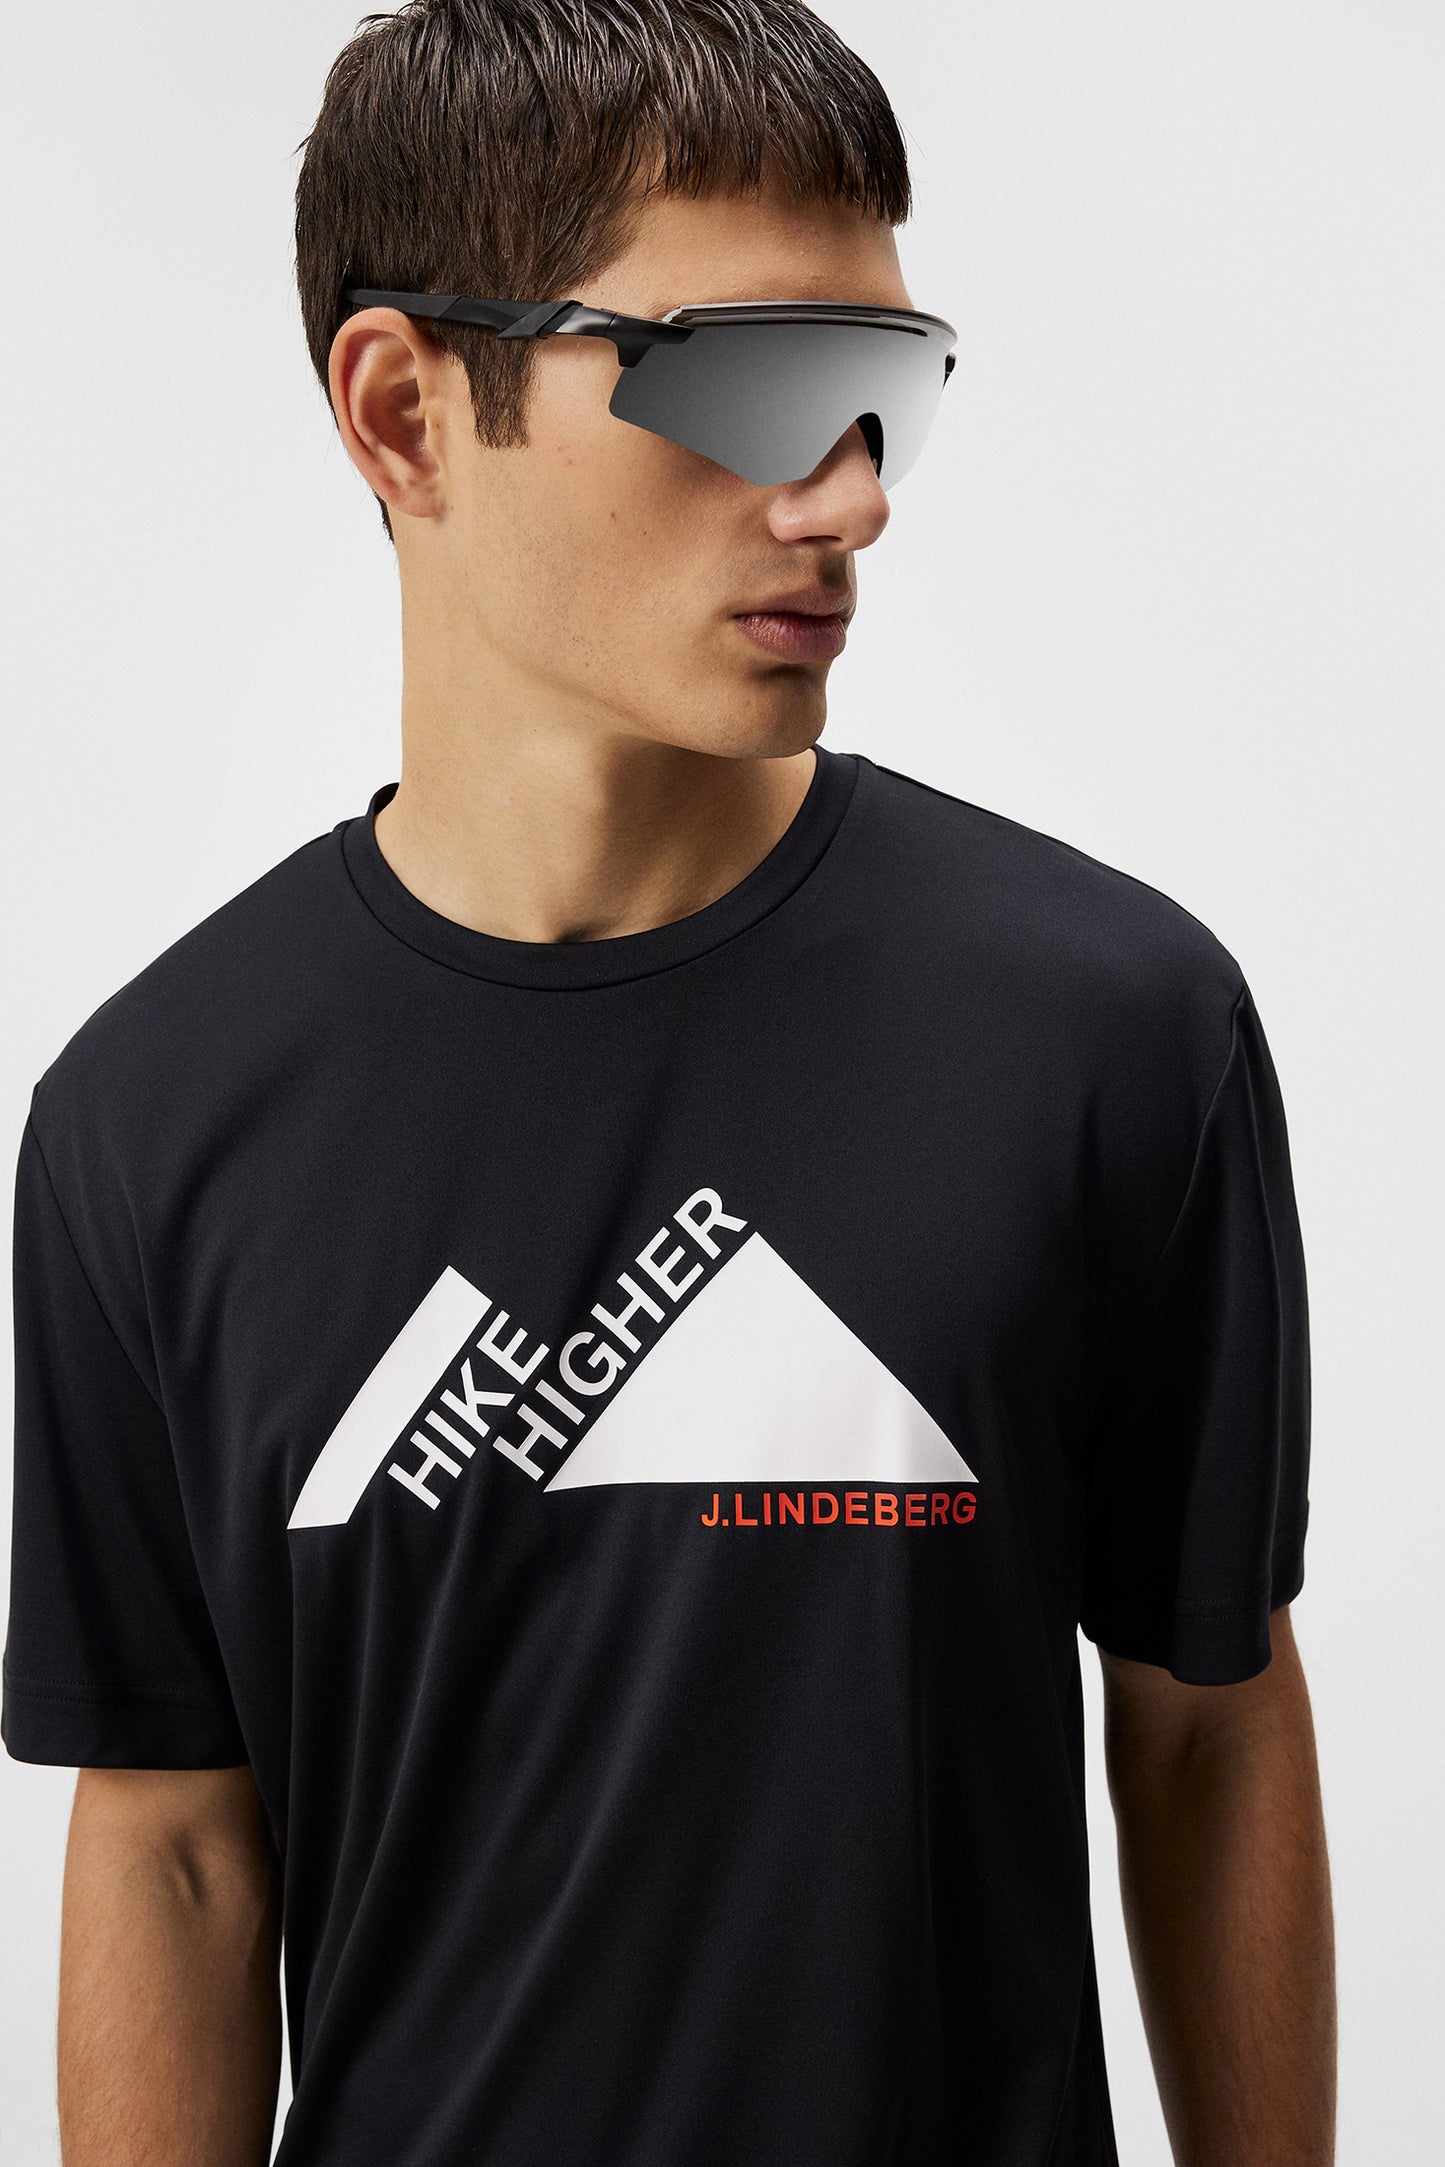 Andreas T-shirt / Black